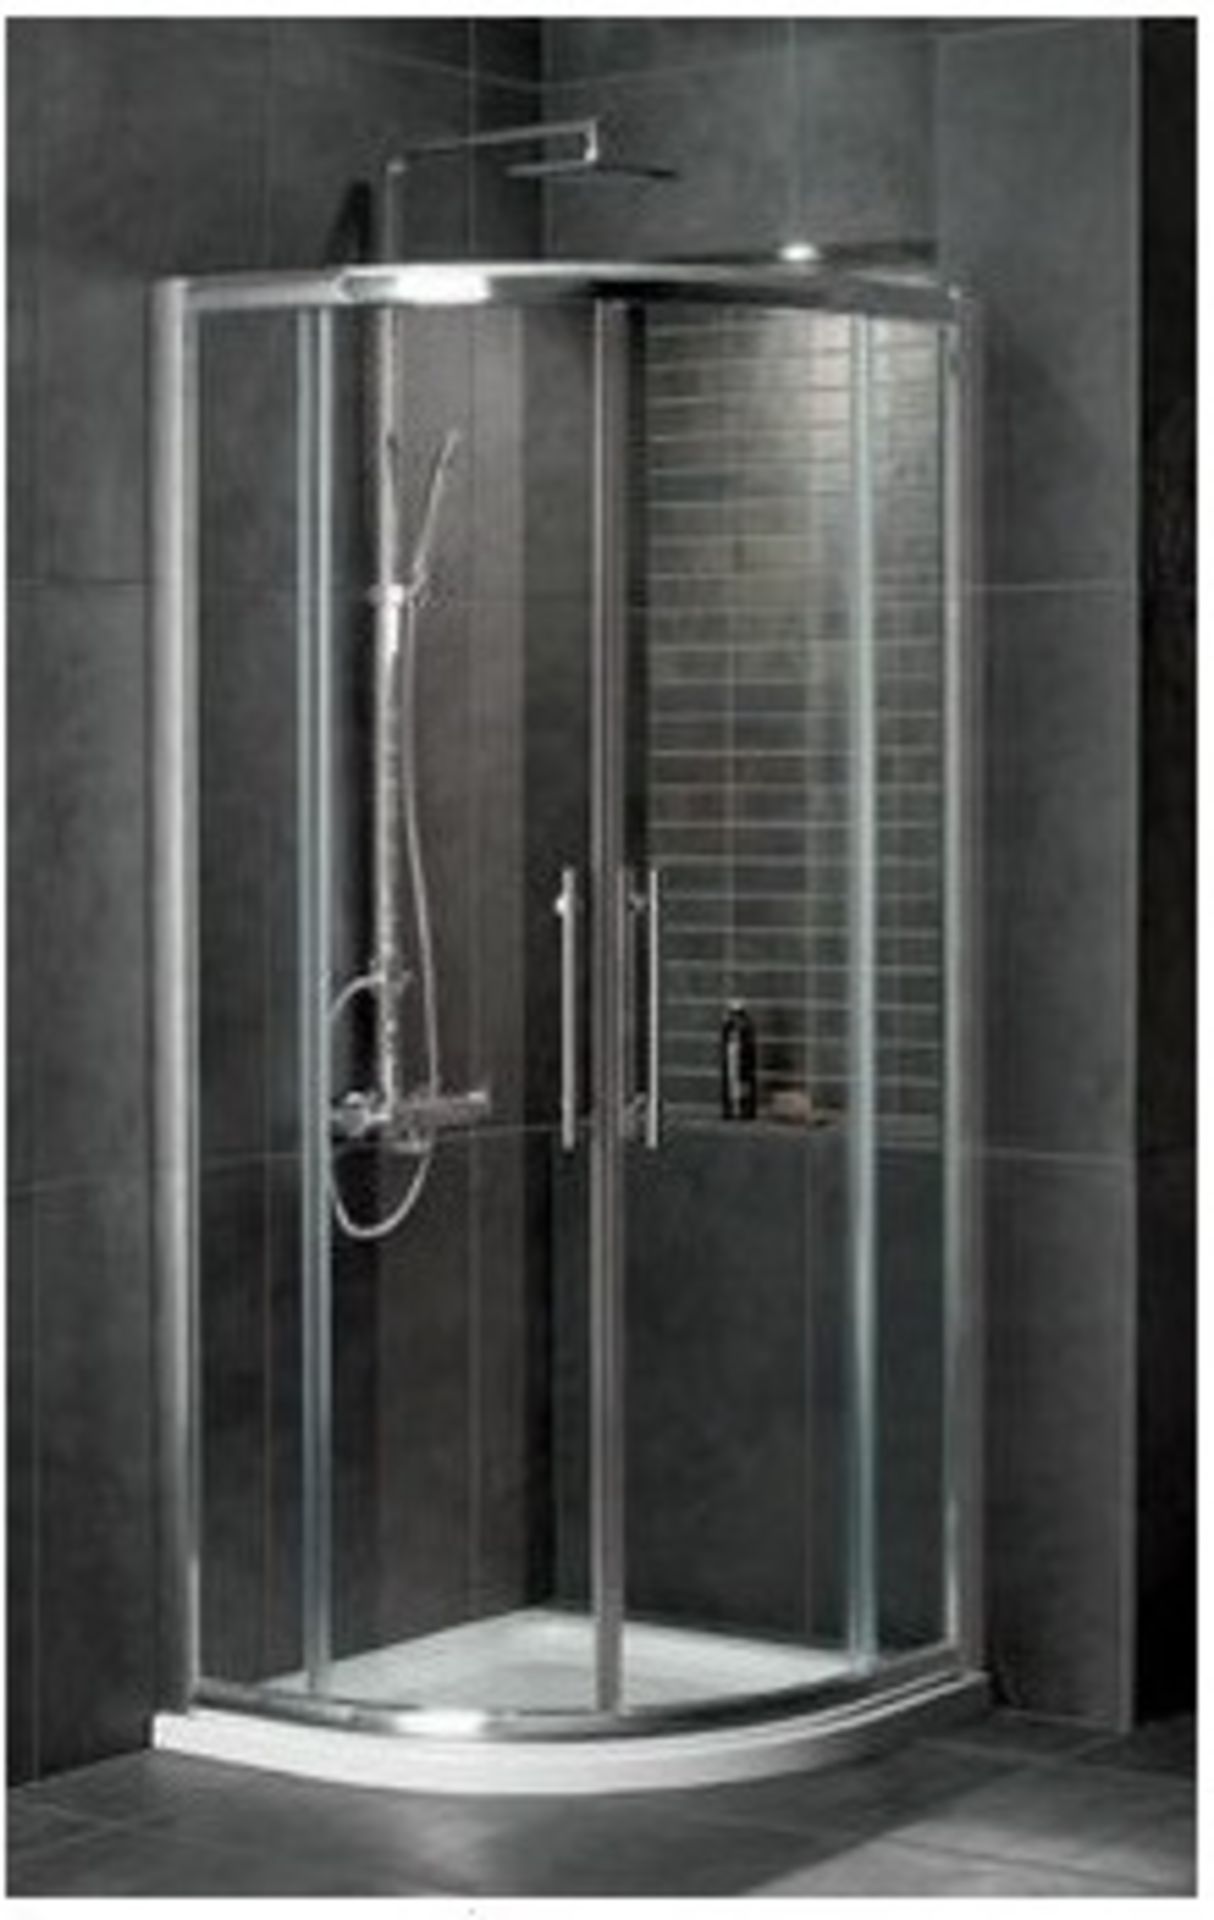 5 x Aqua Lotus 900mm Double Door Quad Shower Enclosure - Polished Chrome Finish - Chrome on Brass